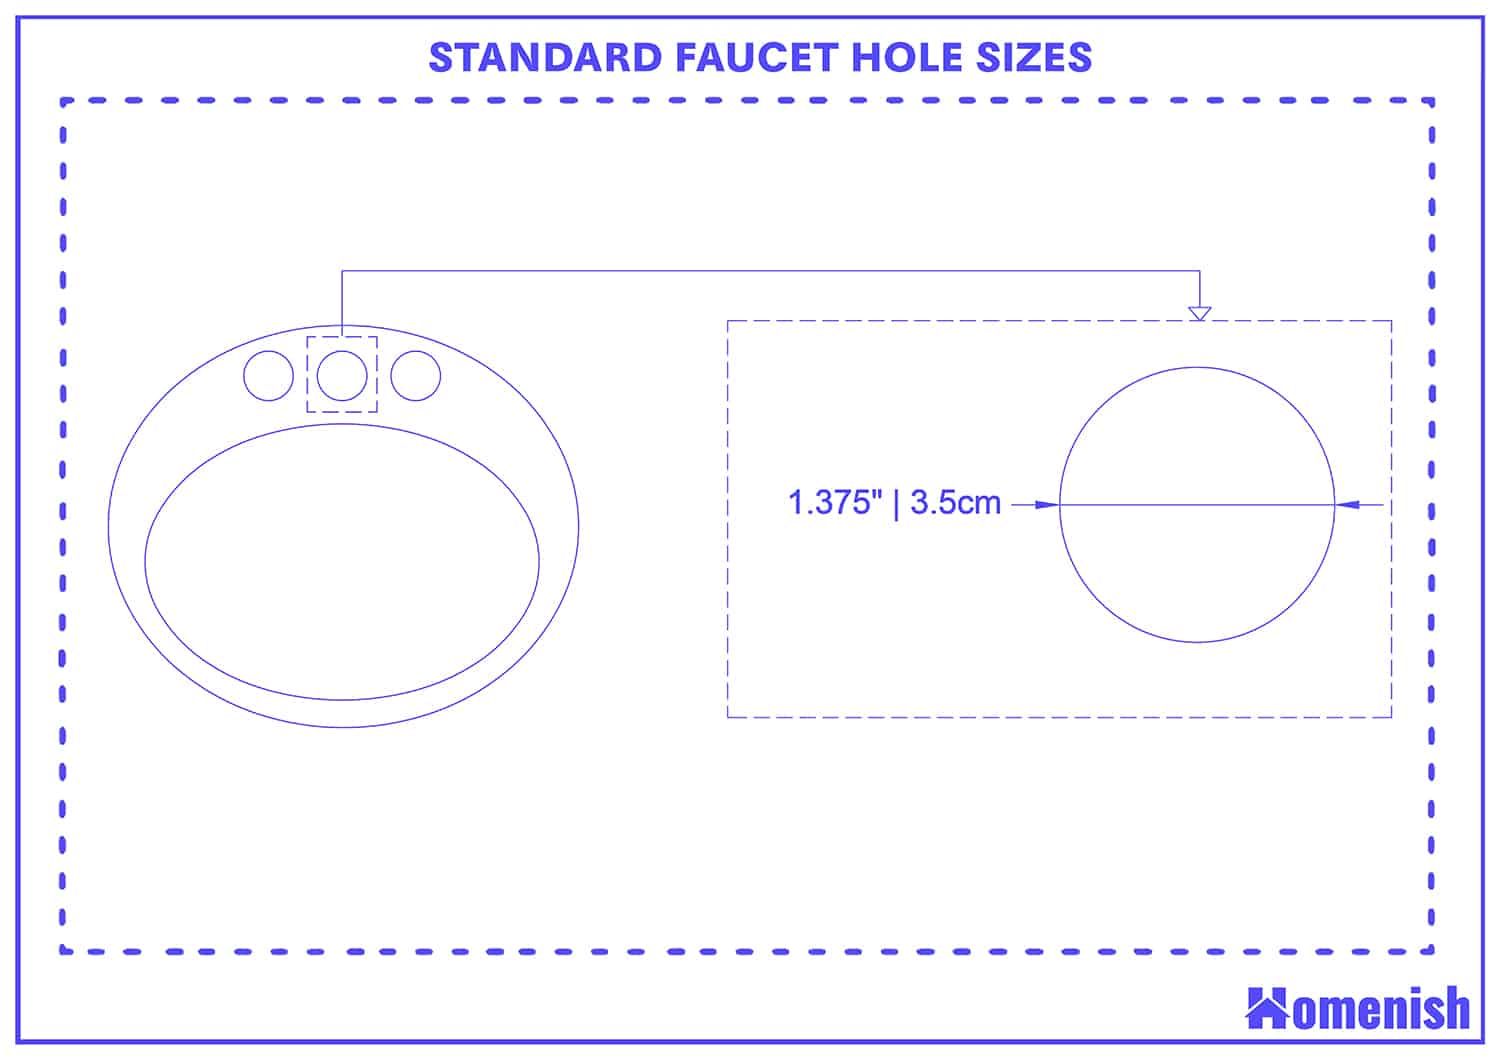 Standard faucet hole sizes